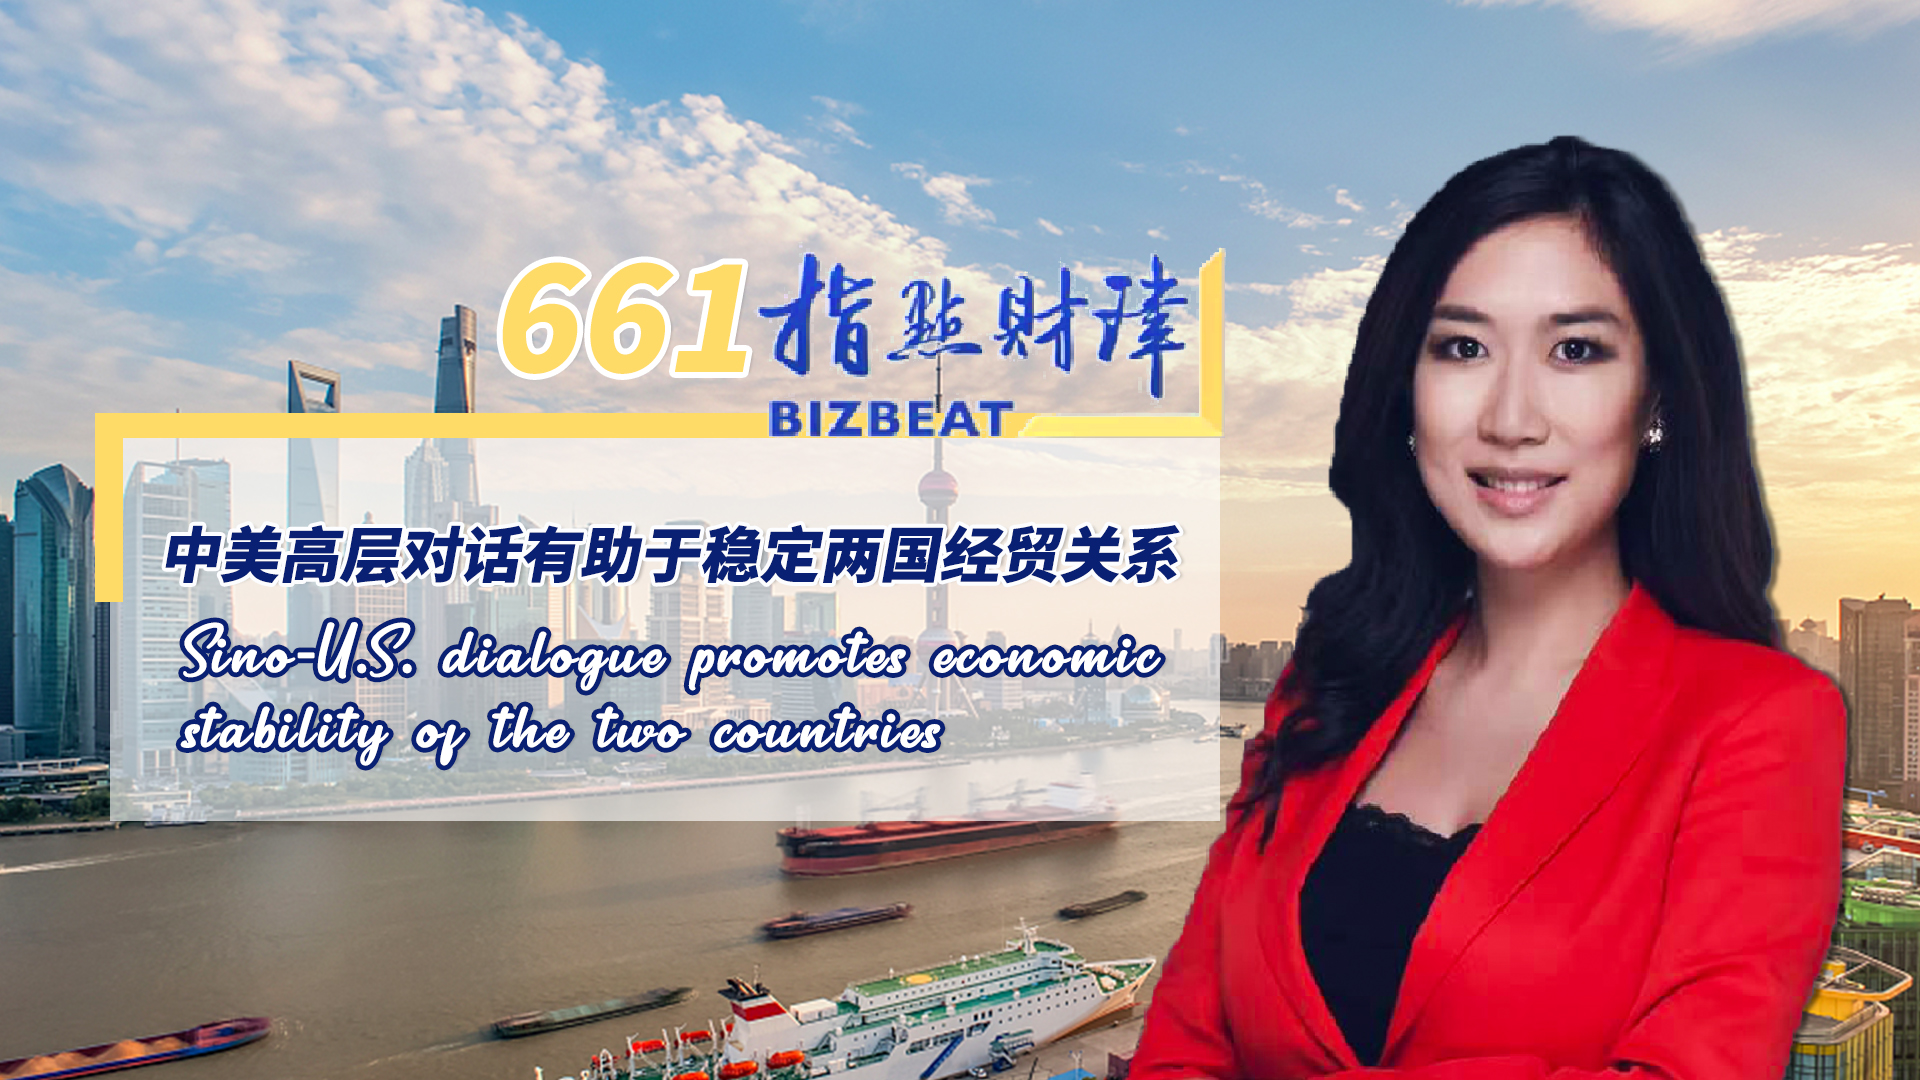 BizBeat: Sino-U.S. dialogue promotes economic stability